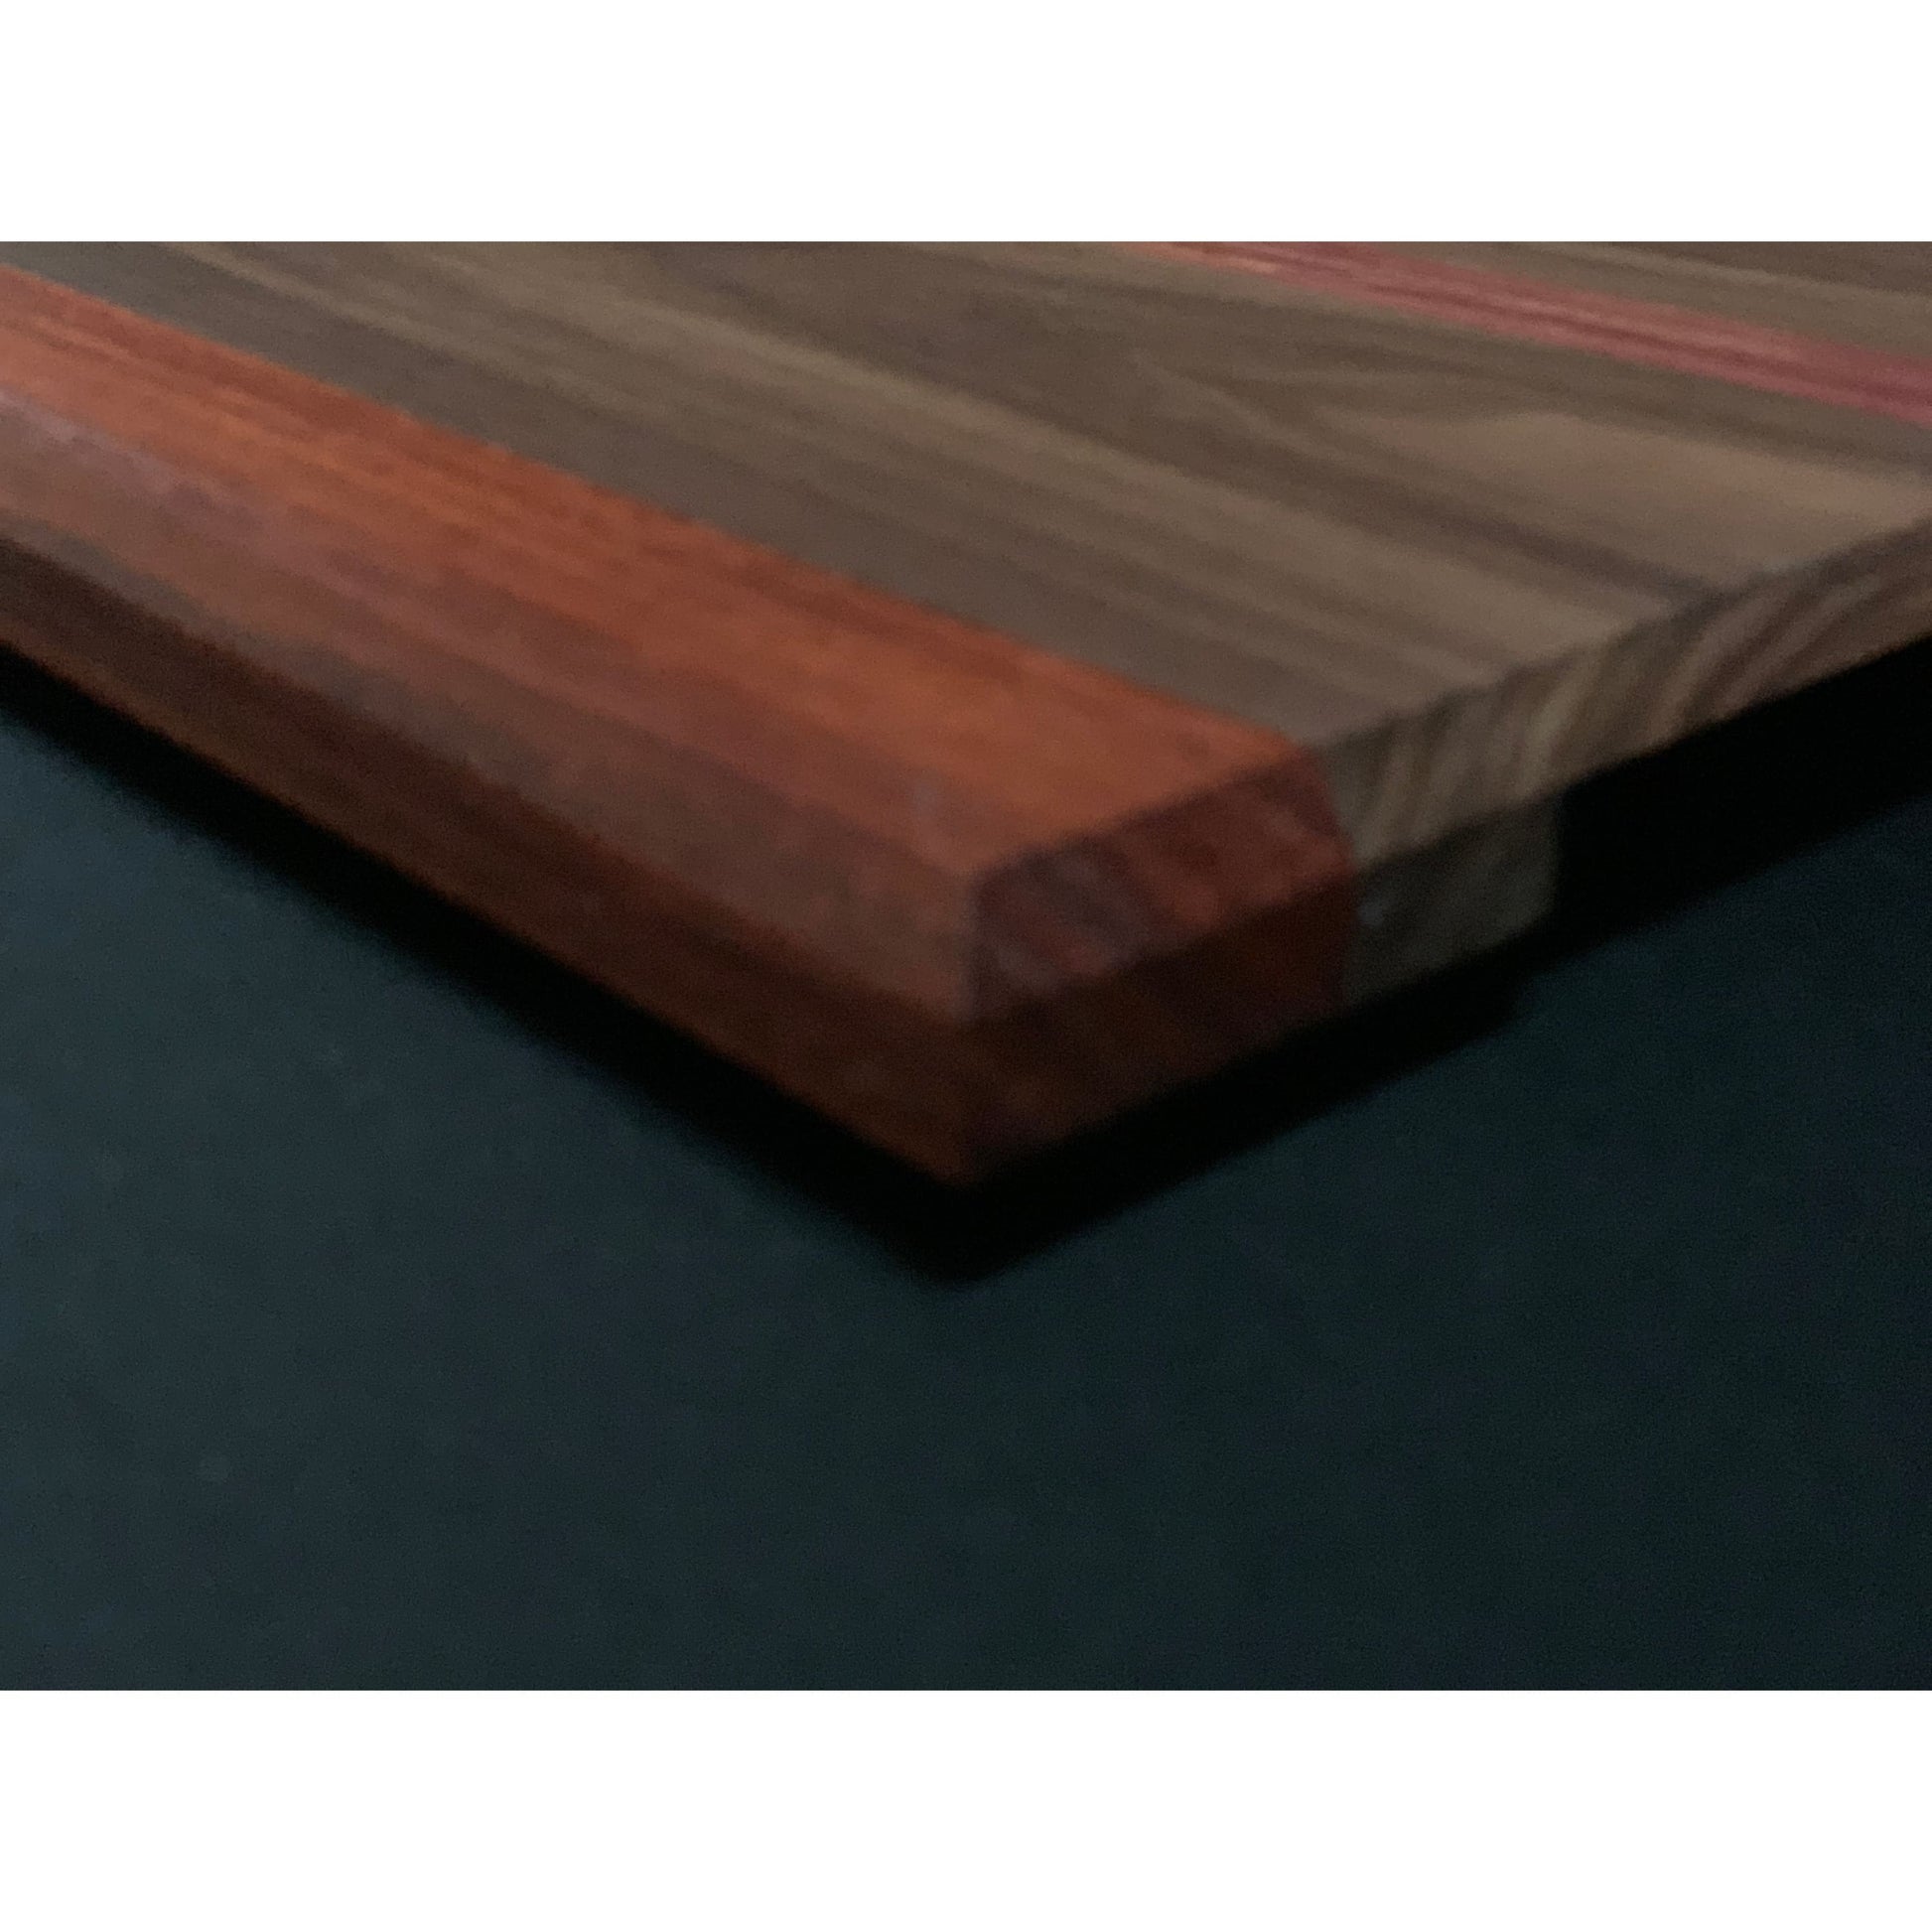 cutting board serving tray charcuterie board hardwood non-slip